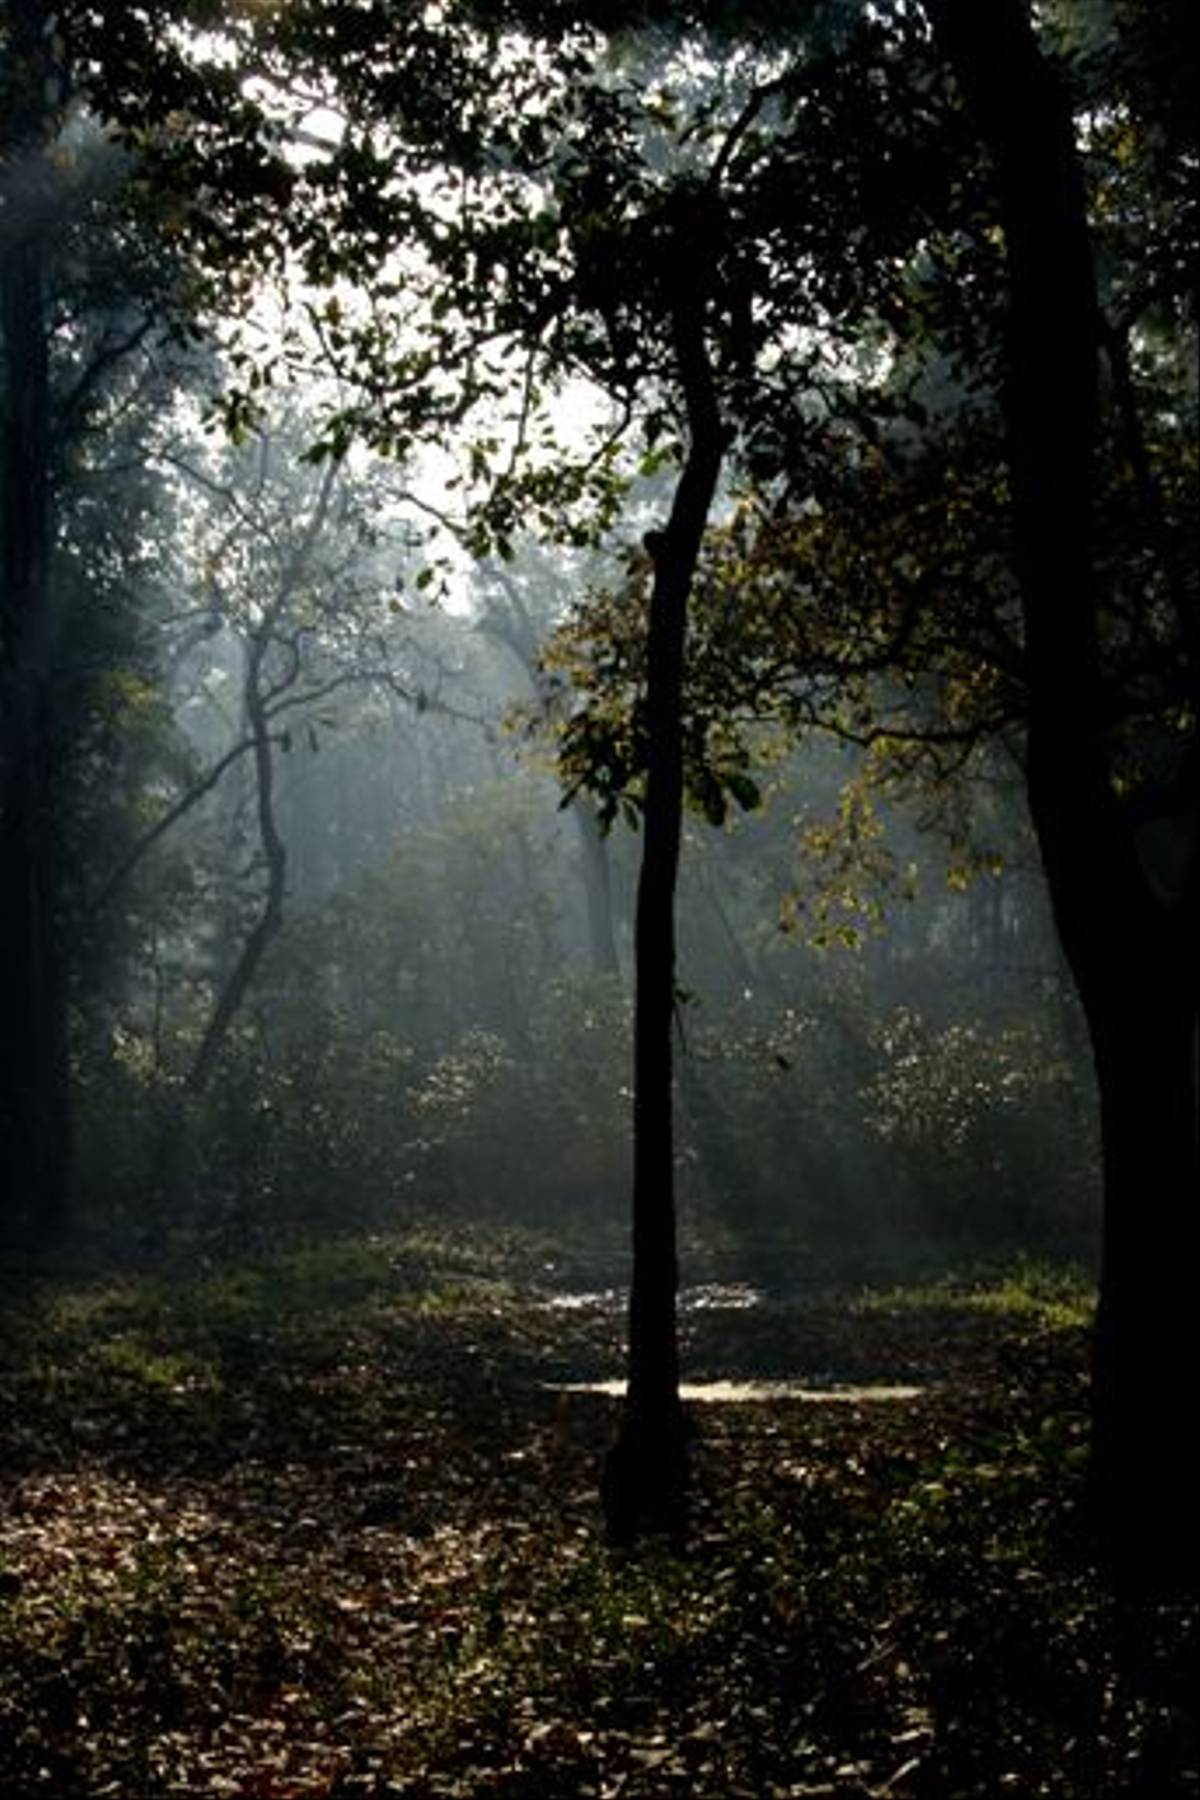 Chitwan National Park, early morning (Paul Stanbury)